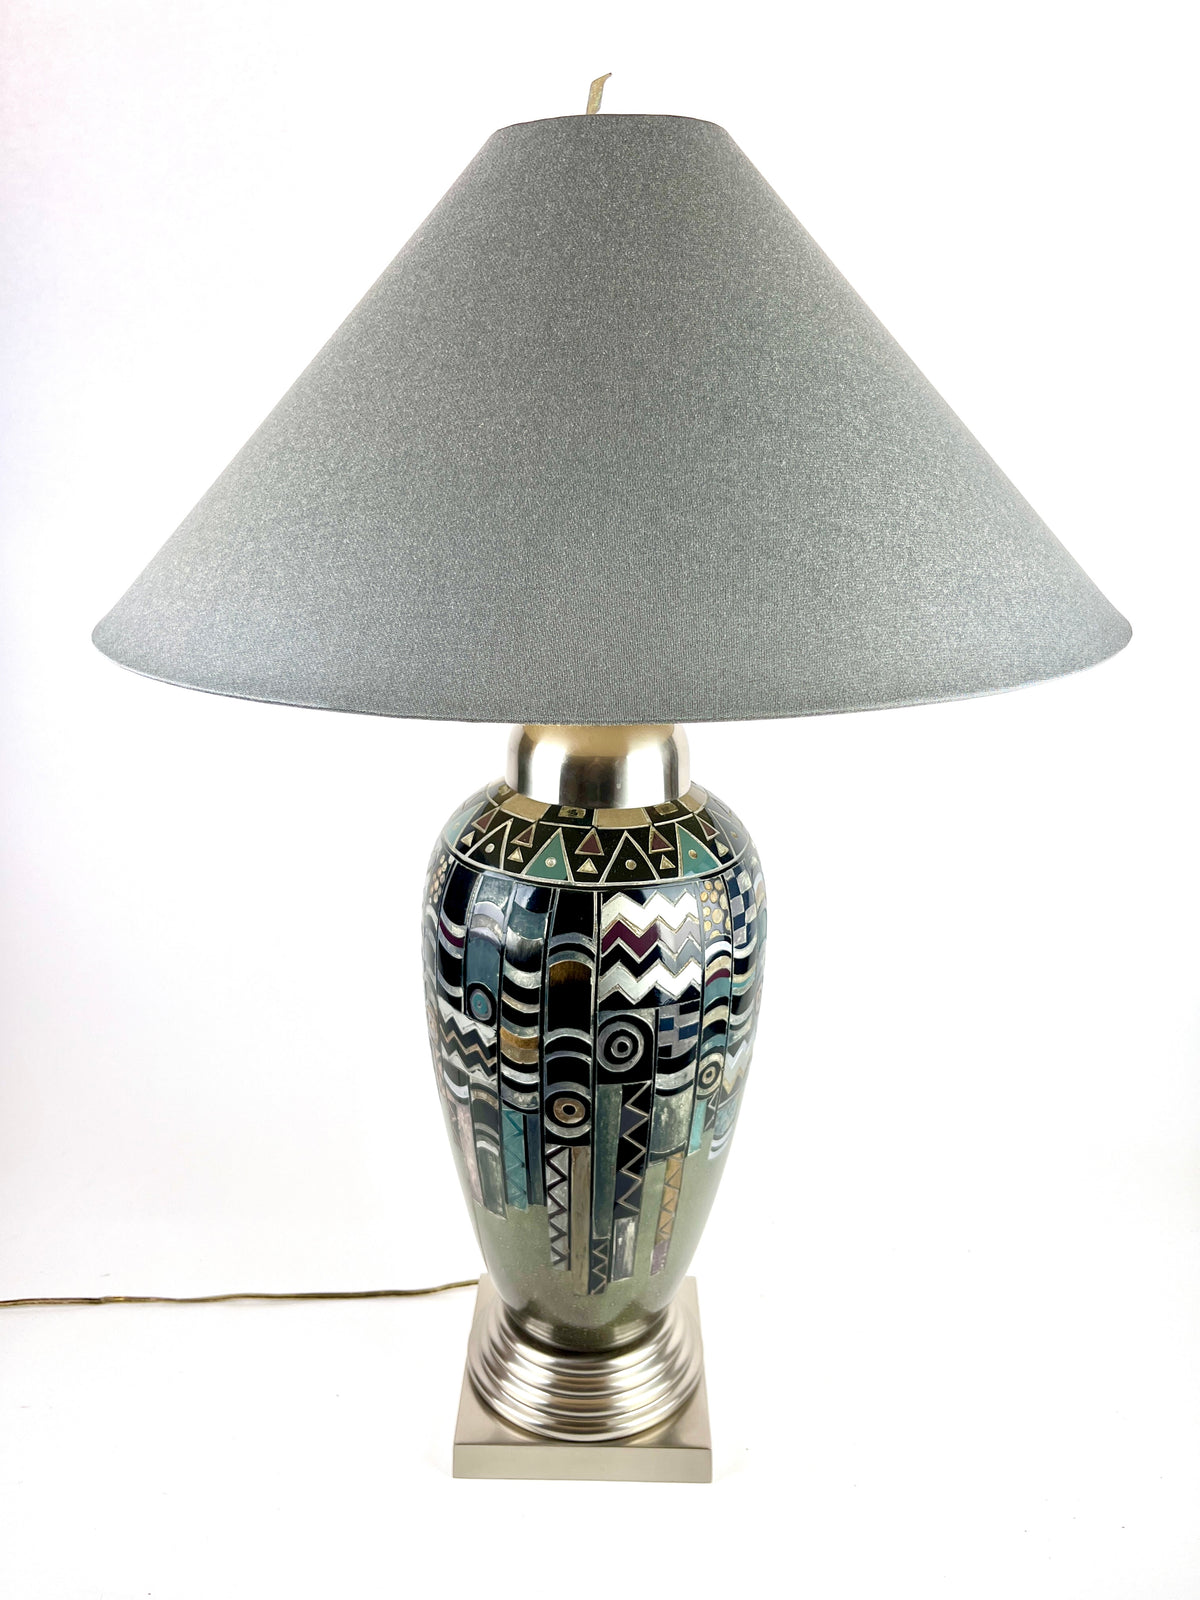 Vintage Postmodern Leeazanne Lamp